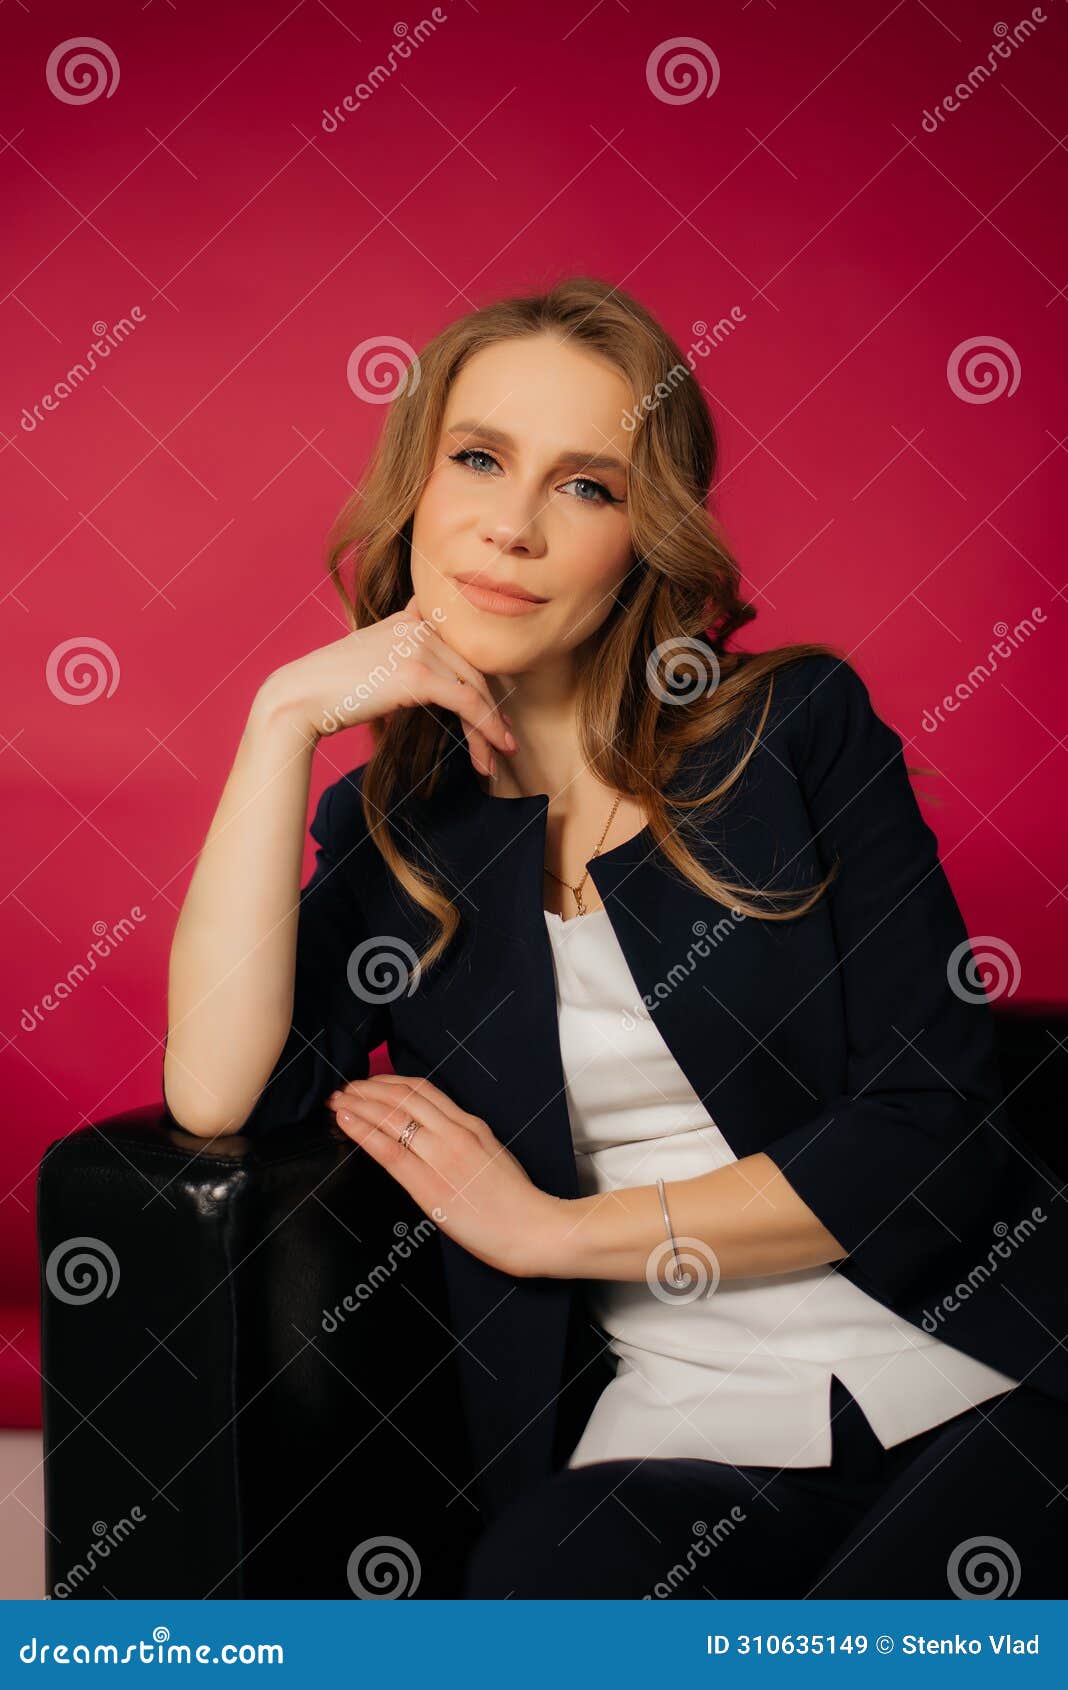 elegant buisness woman on pink background